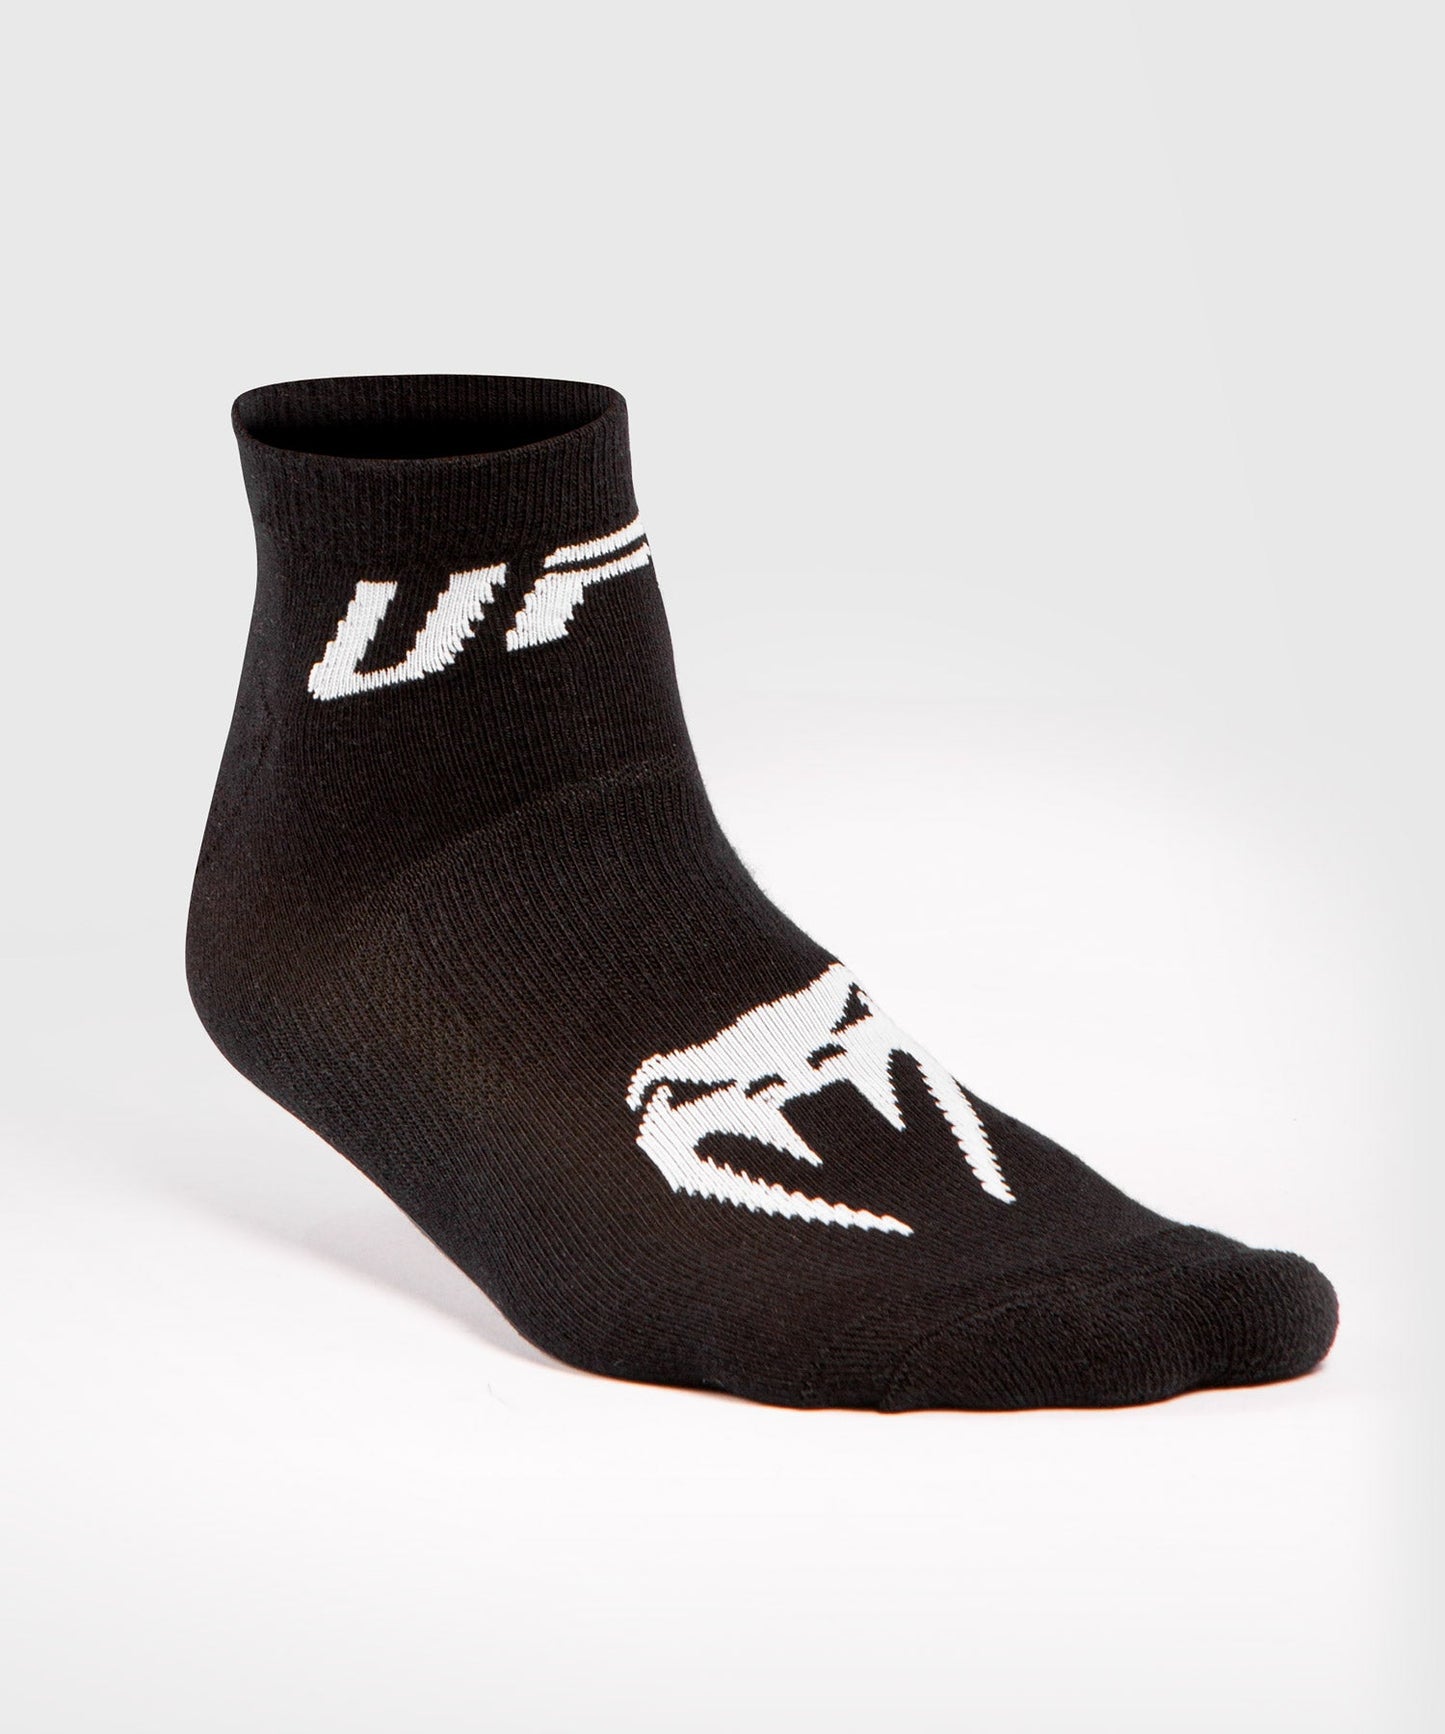 UFC Venum Authentic Fight Week unisex Performance Sock set of 2 - Black